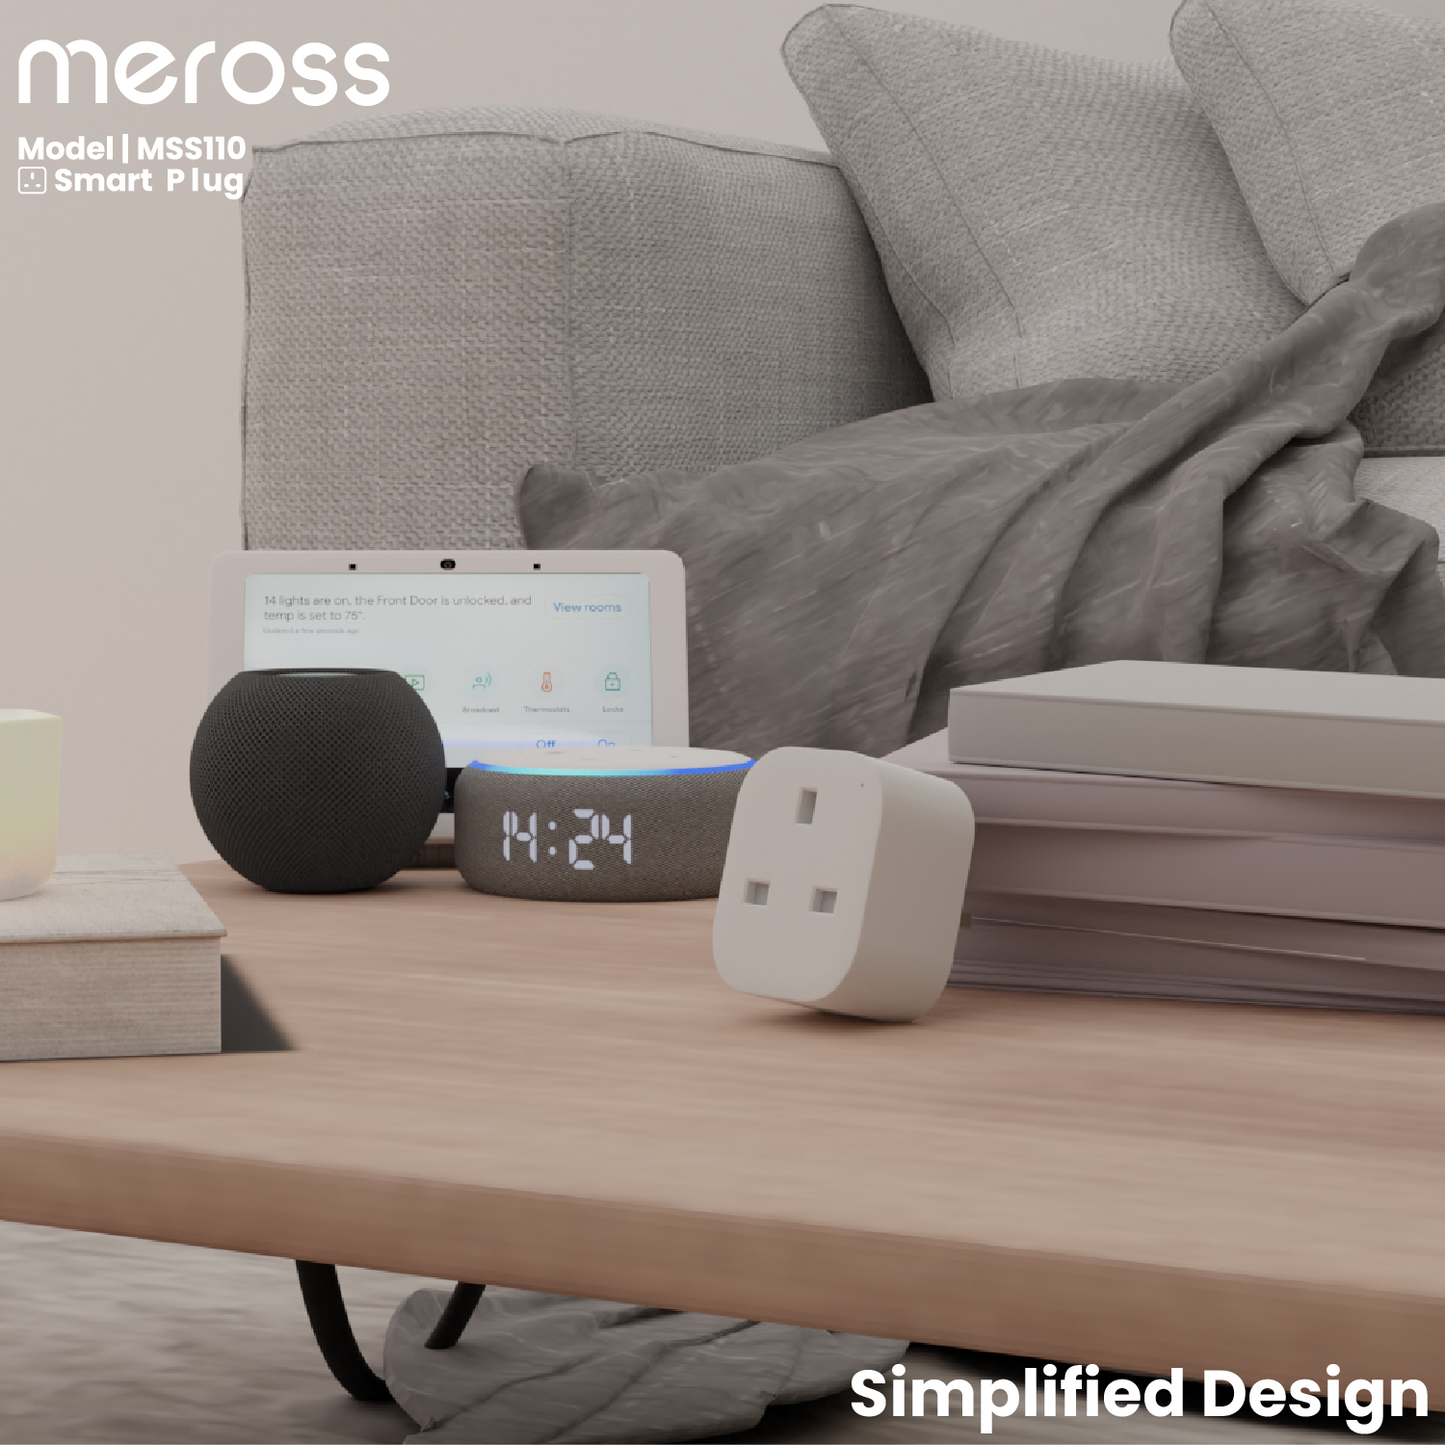 Meross Wifi Smart Plug 智能Wifi插頭 MSS110